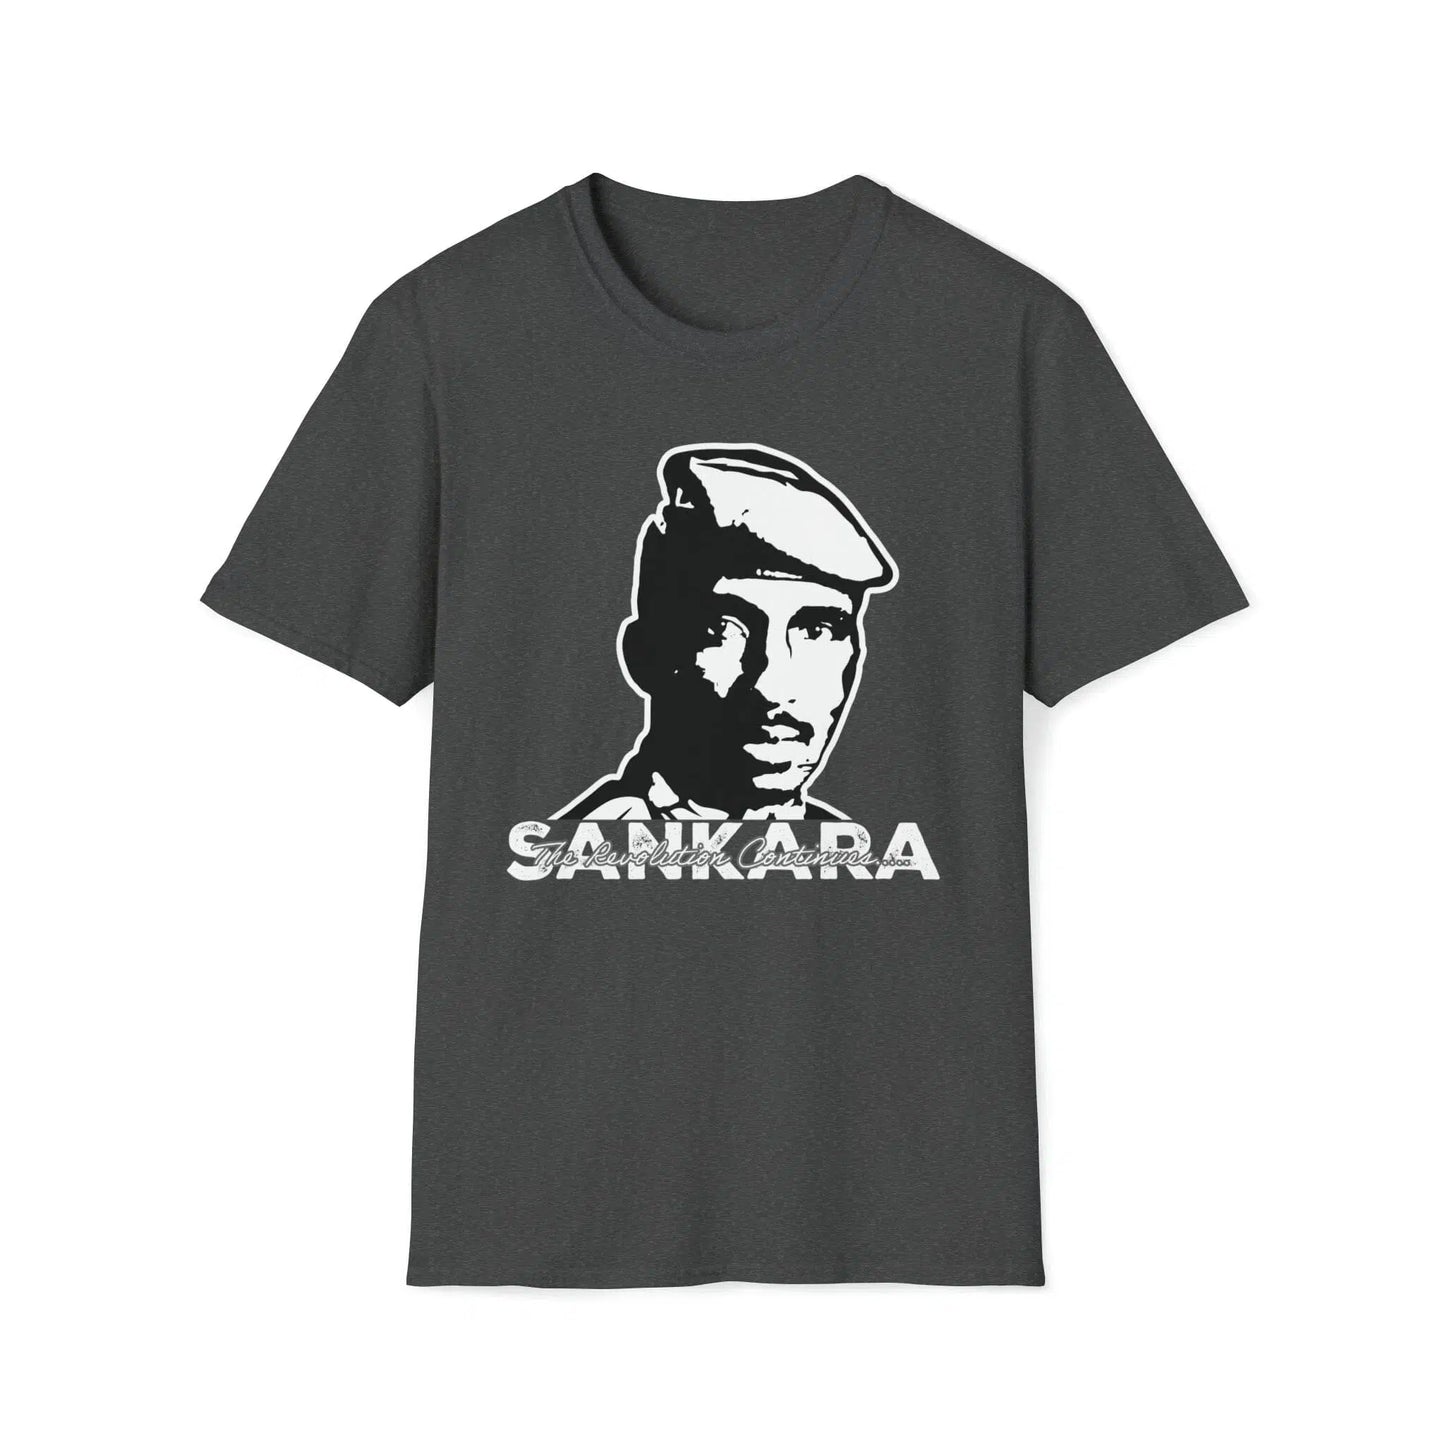 Thomas Sankara t shirt: Celebrating a Great Pan African Icon